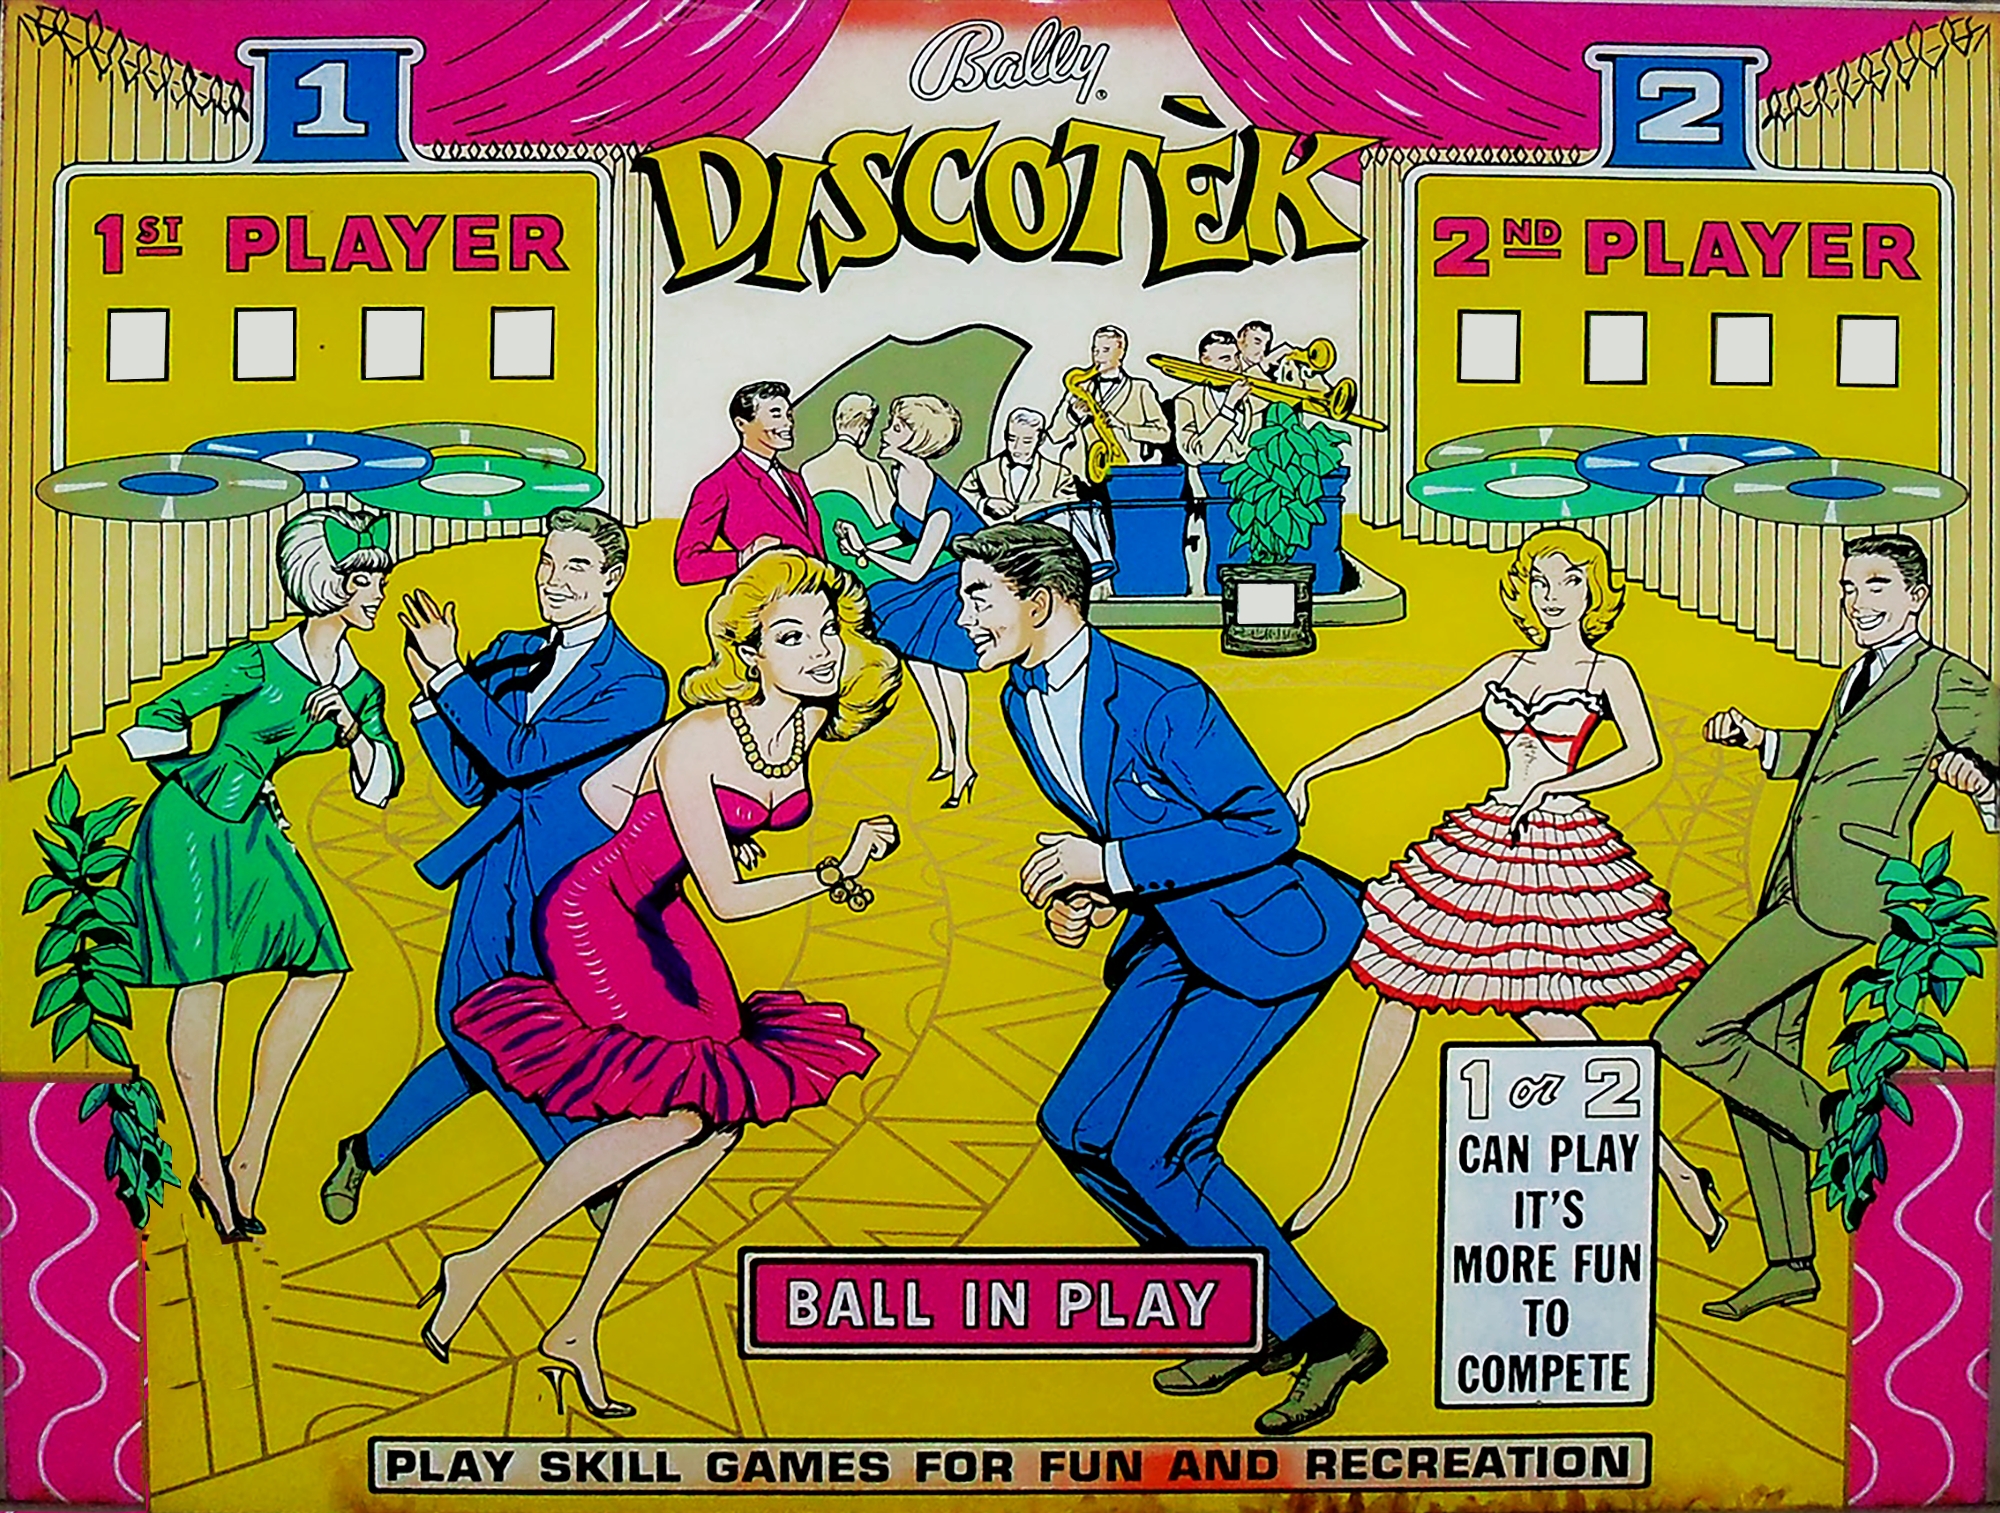 Discotek (Bally, 1965) (Wildman) Backglass